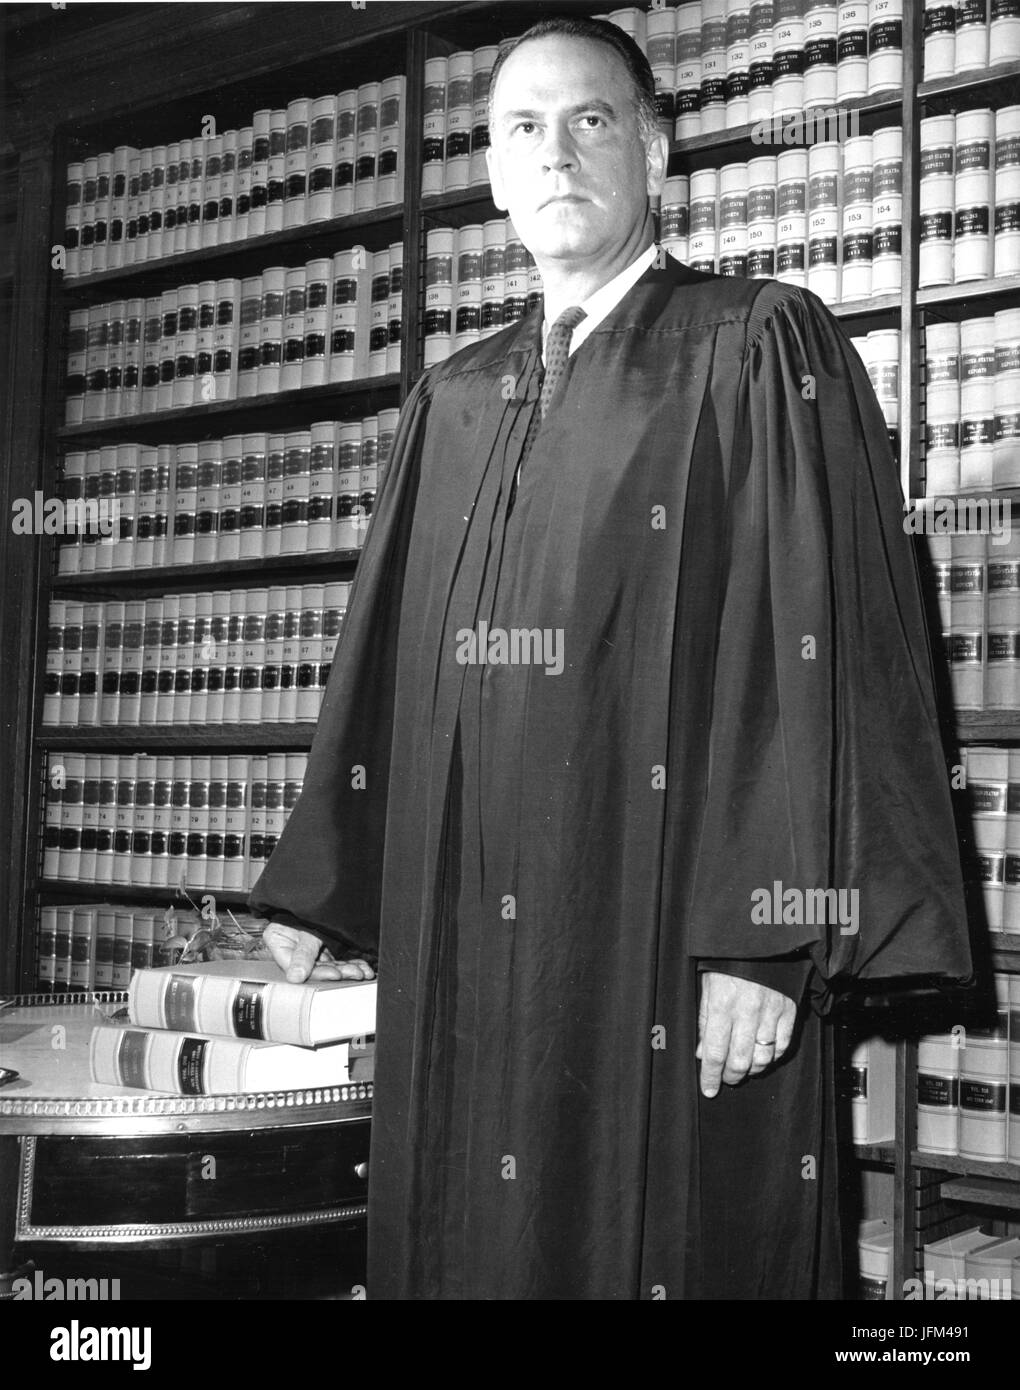 Potter Stewart, Associate Justice of the United States Supreme Court. Washington, DC, 1962 Stock Photo